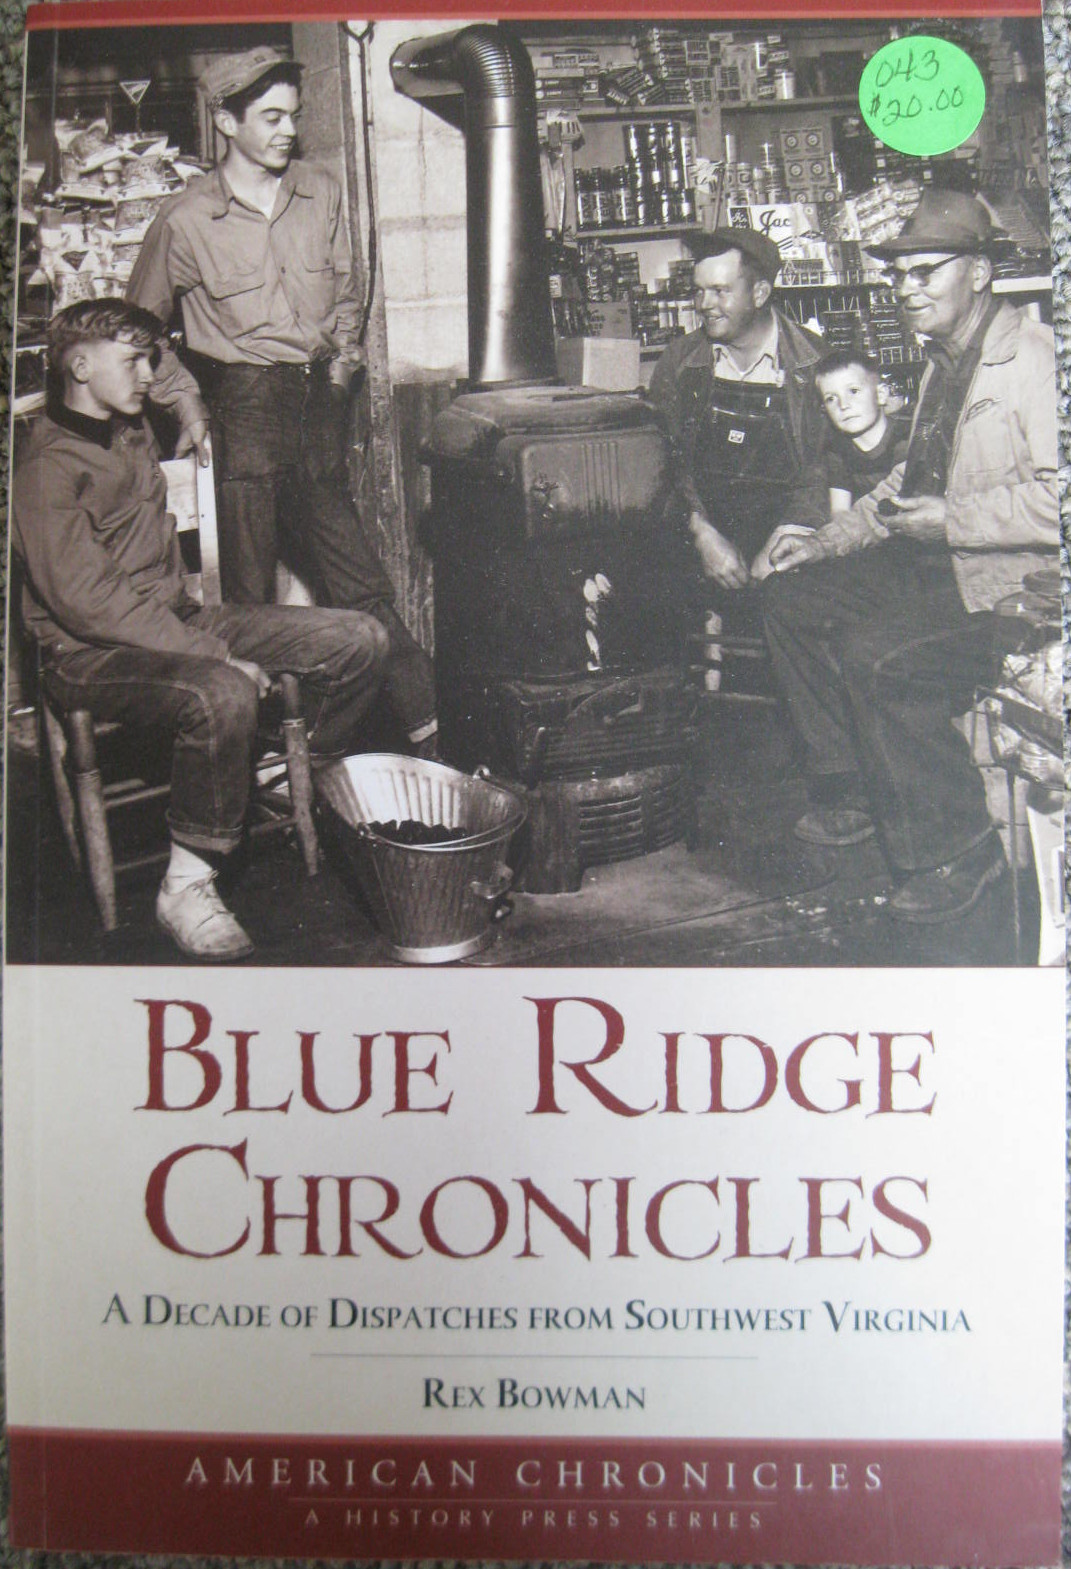 Blue Ridge Chronicles